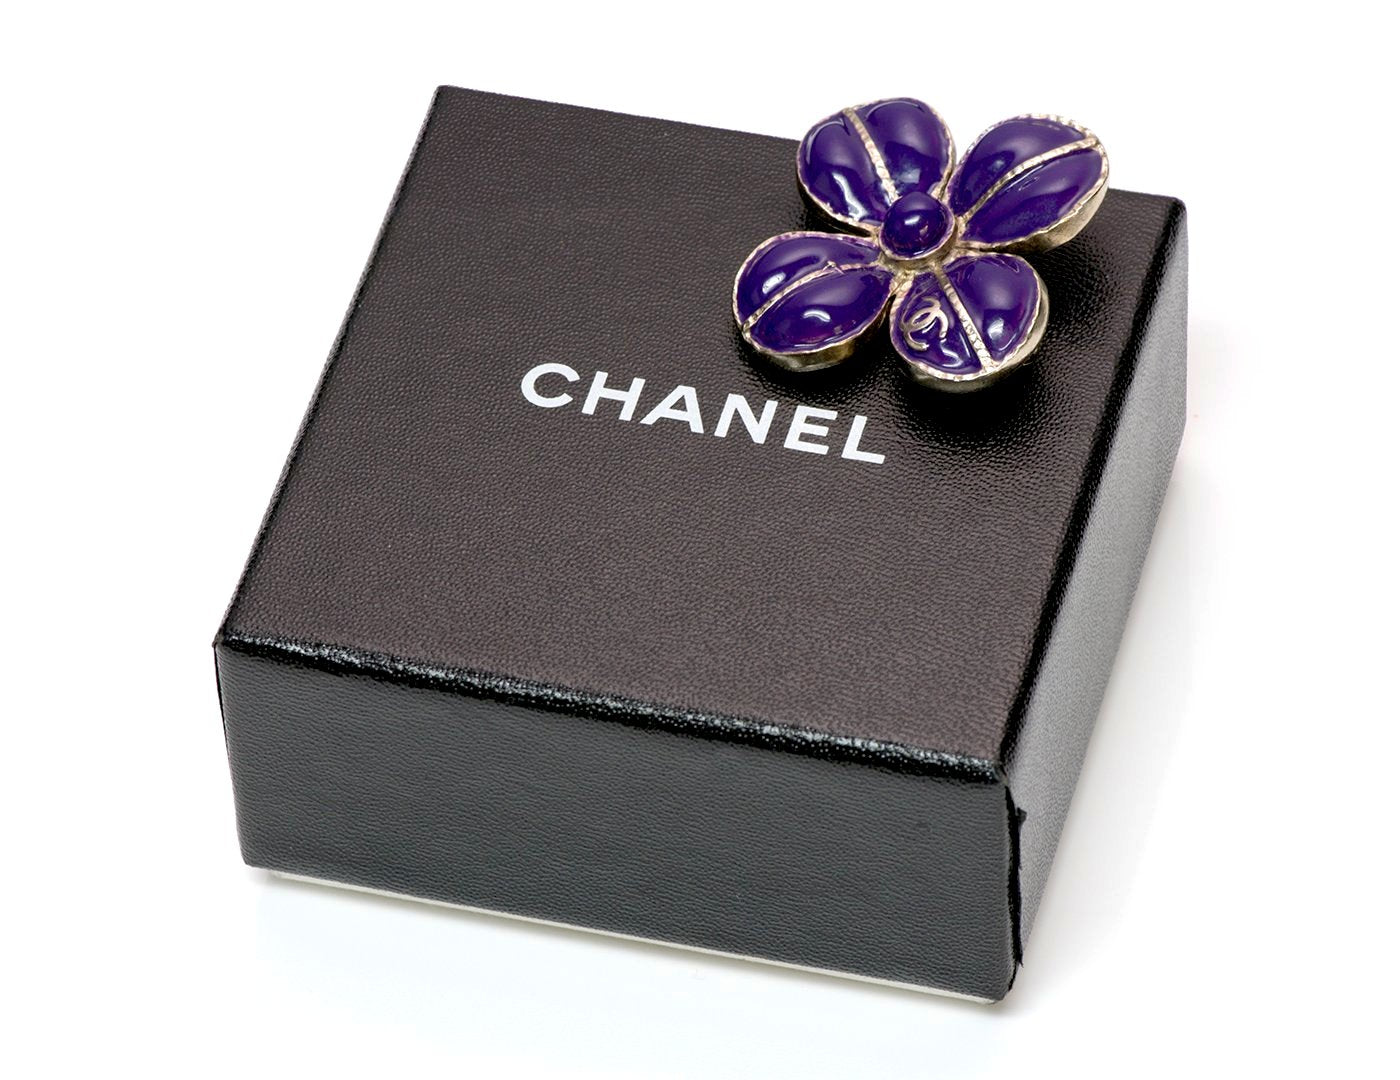 Chanel Maison Gripoix Glass Camellia Flower Brooch